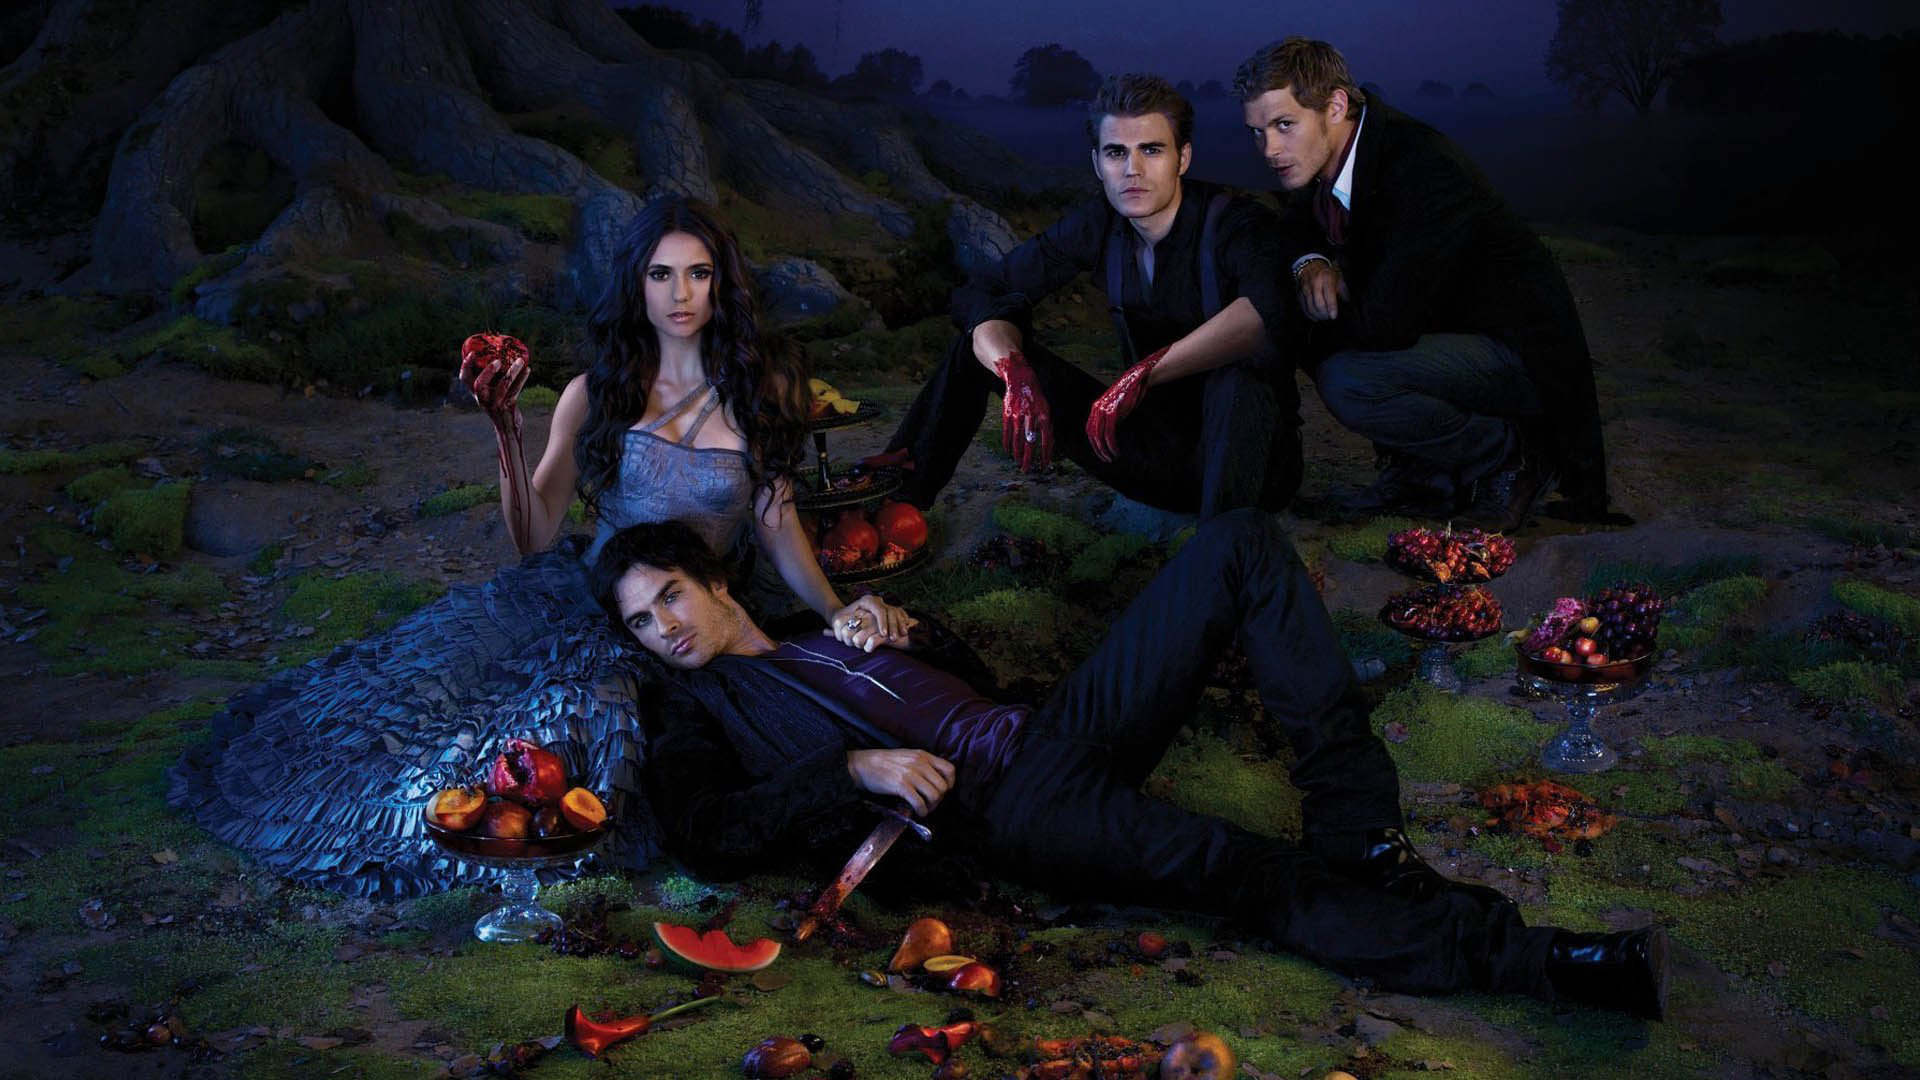 Elena Gilbert Stefan Salvatore With Blood Hand Damon Salvatore With Knife 2K The Vampire Diaries